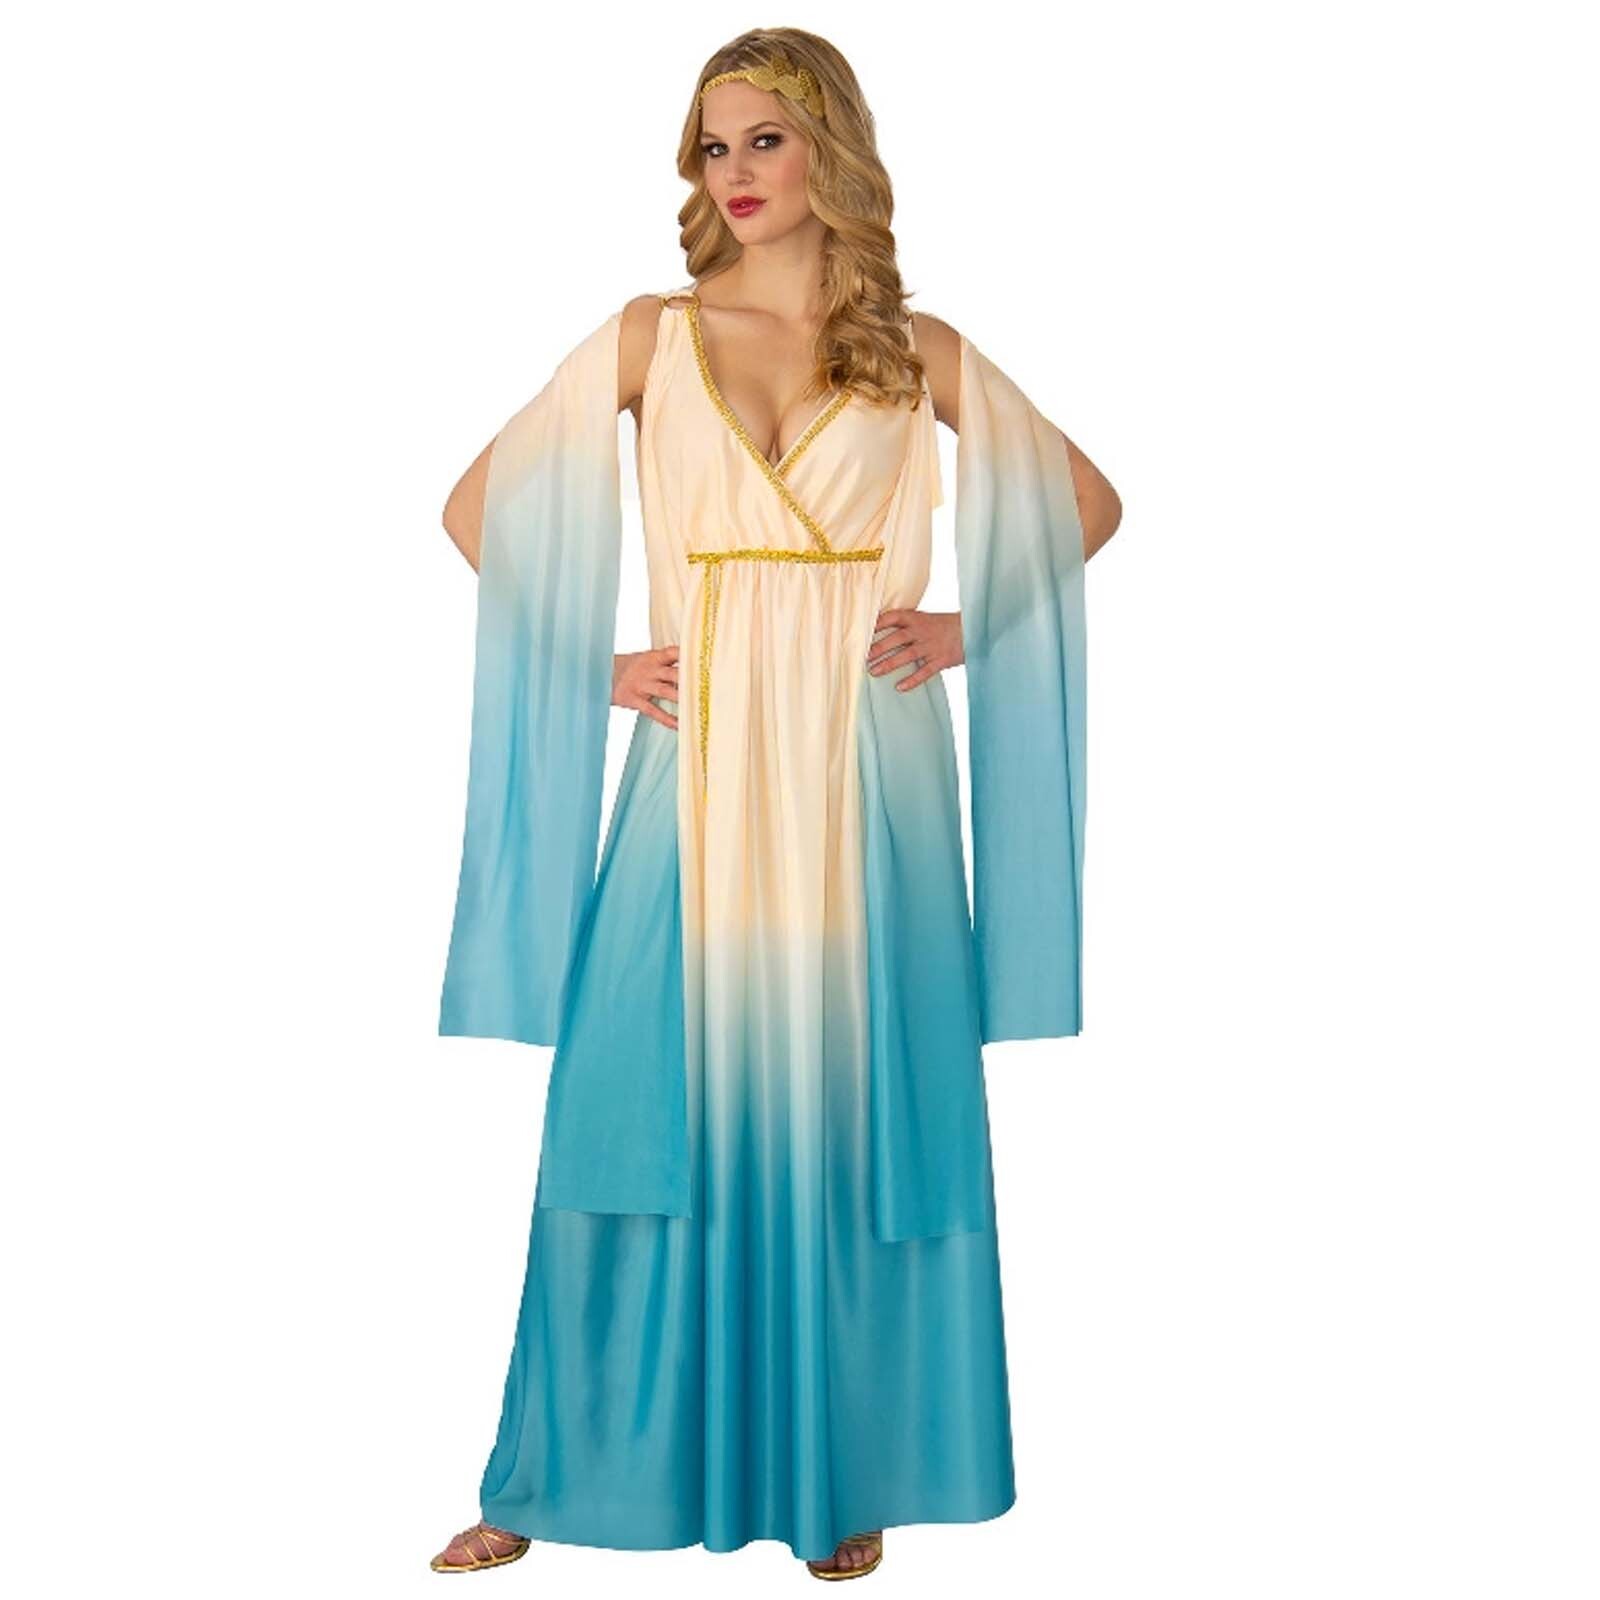 Child Athena Goddess Costume 